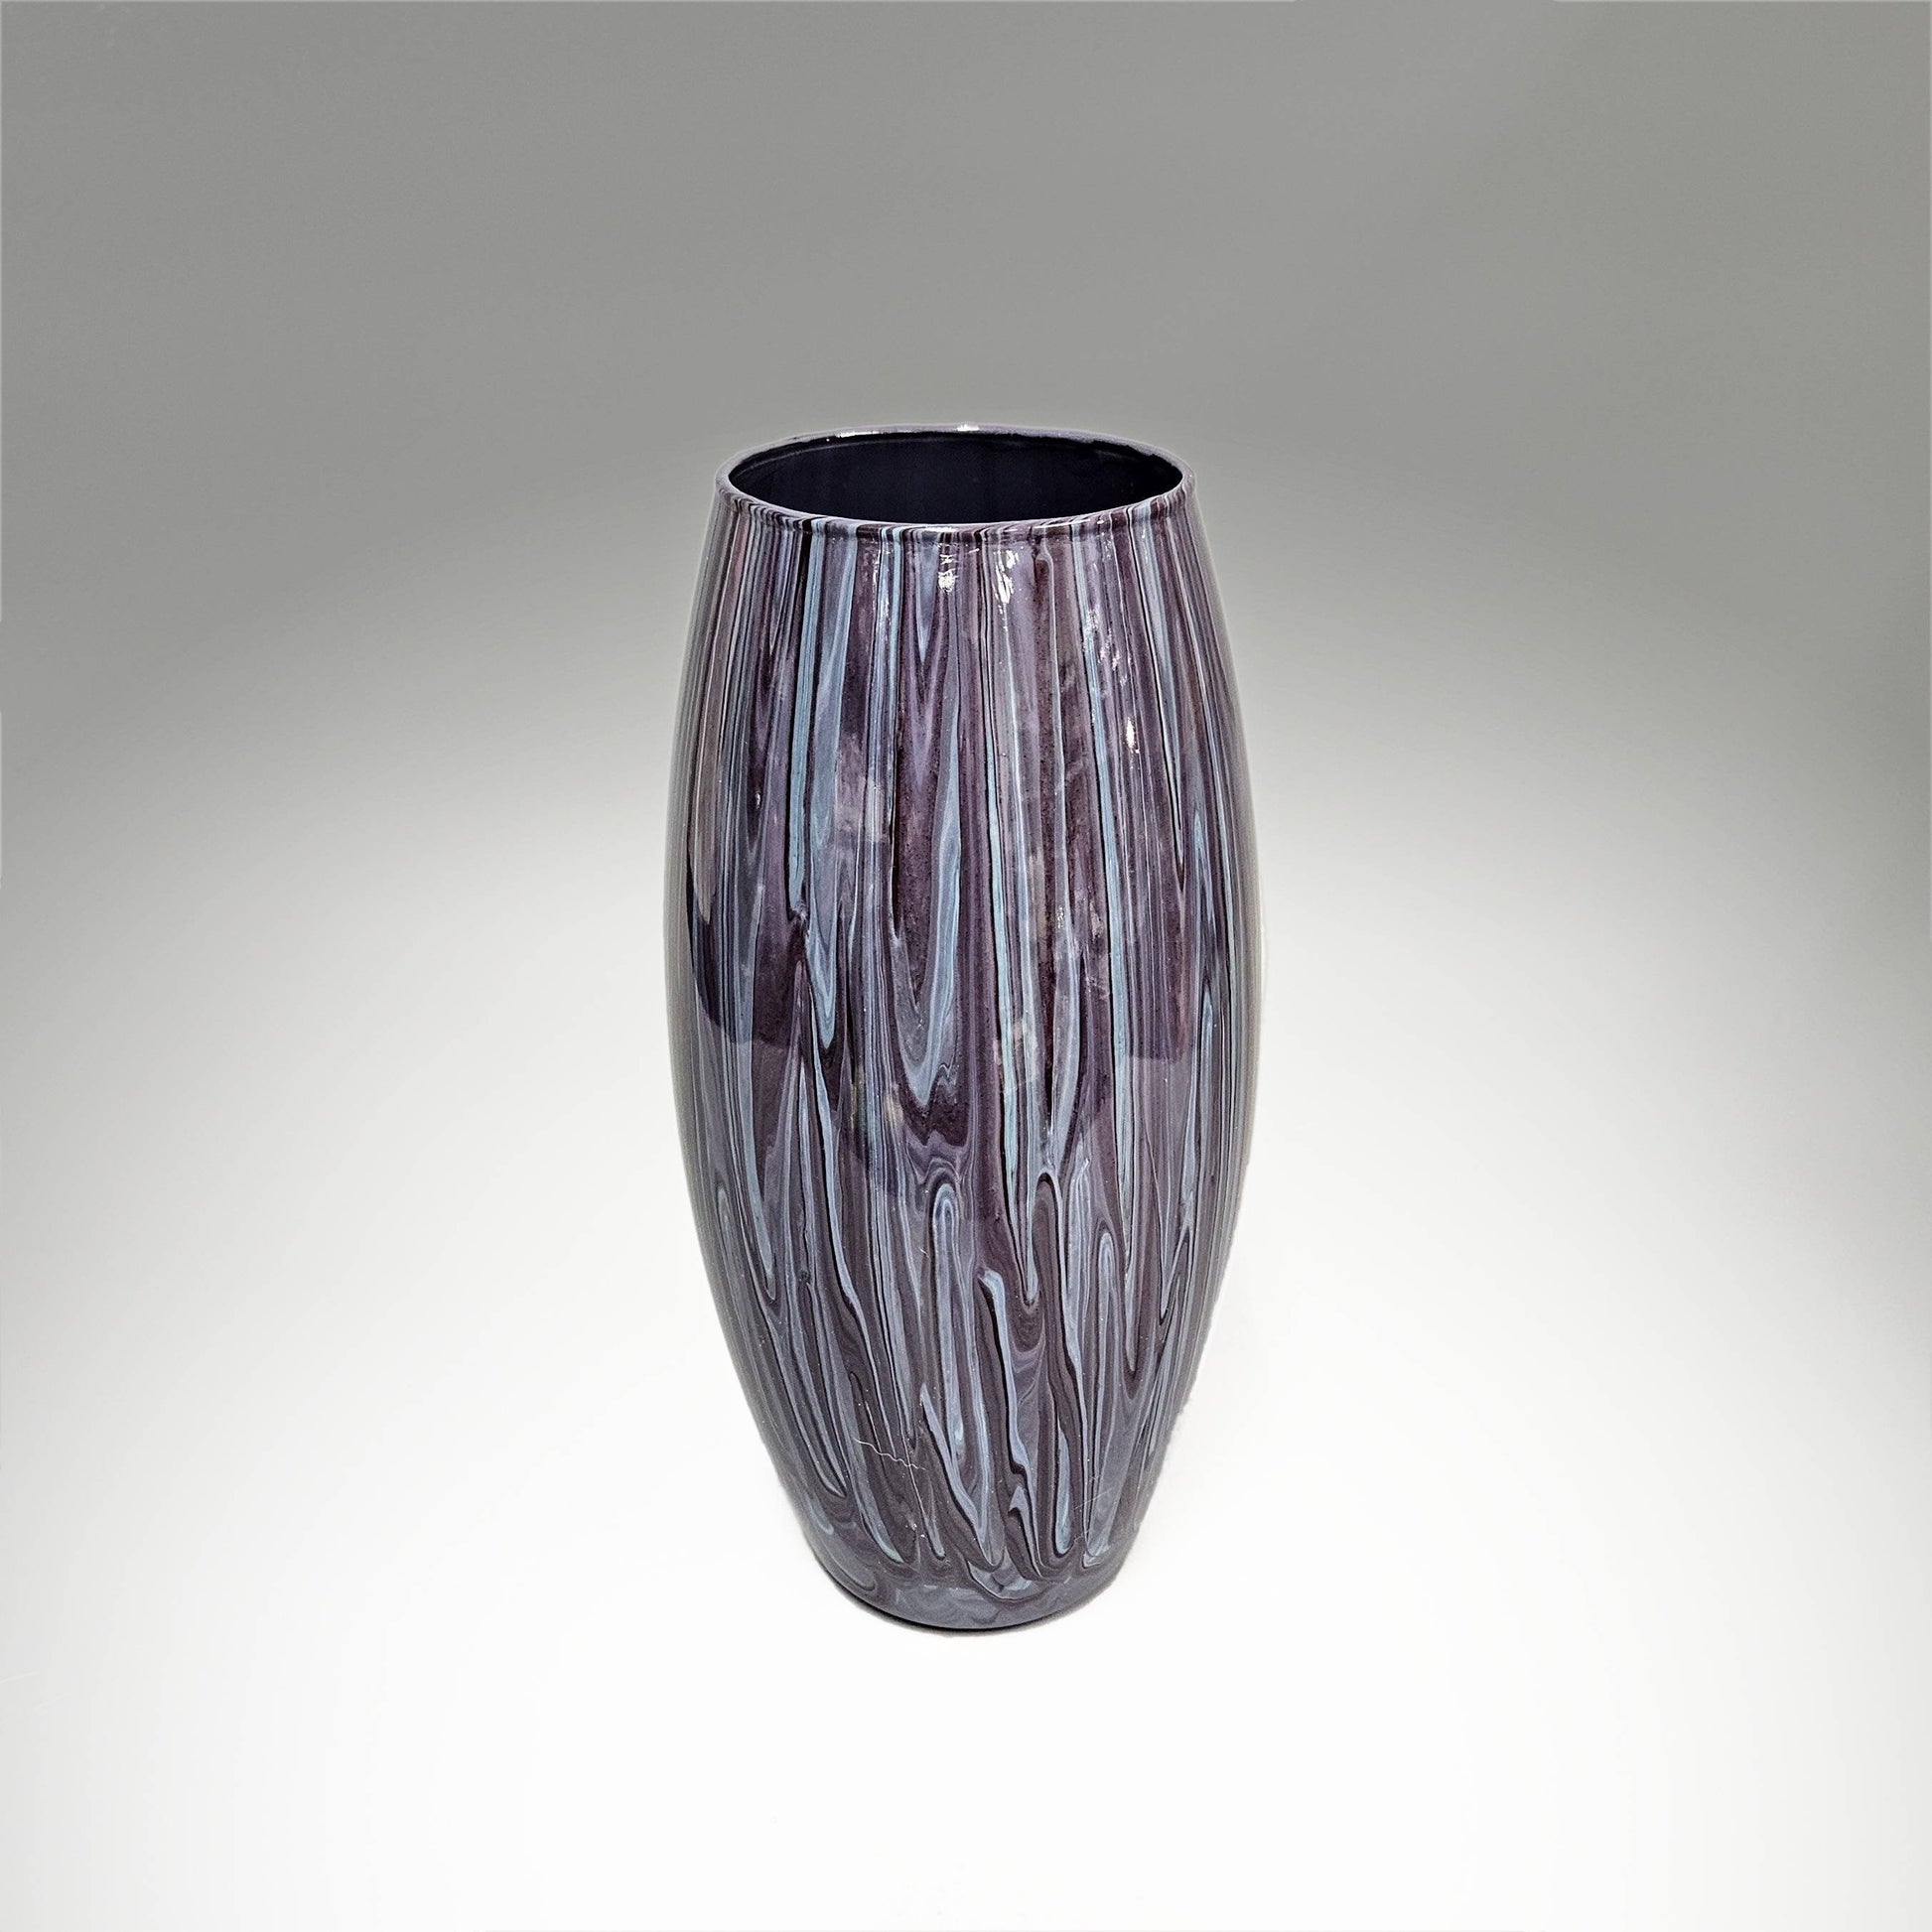 Fluid Art Vase in Black Purple Gray | Hostess Gift Ideas